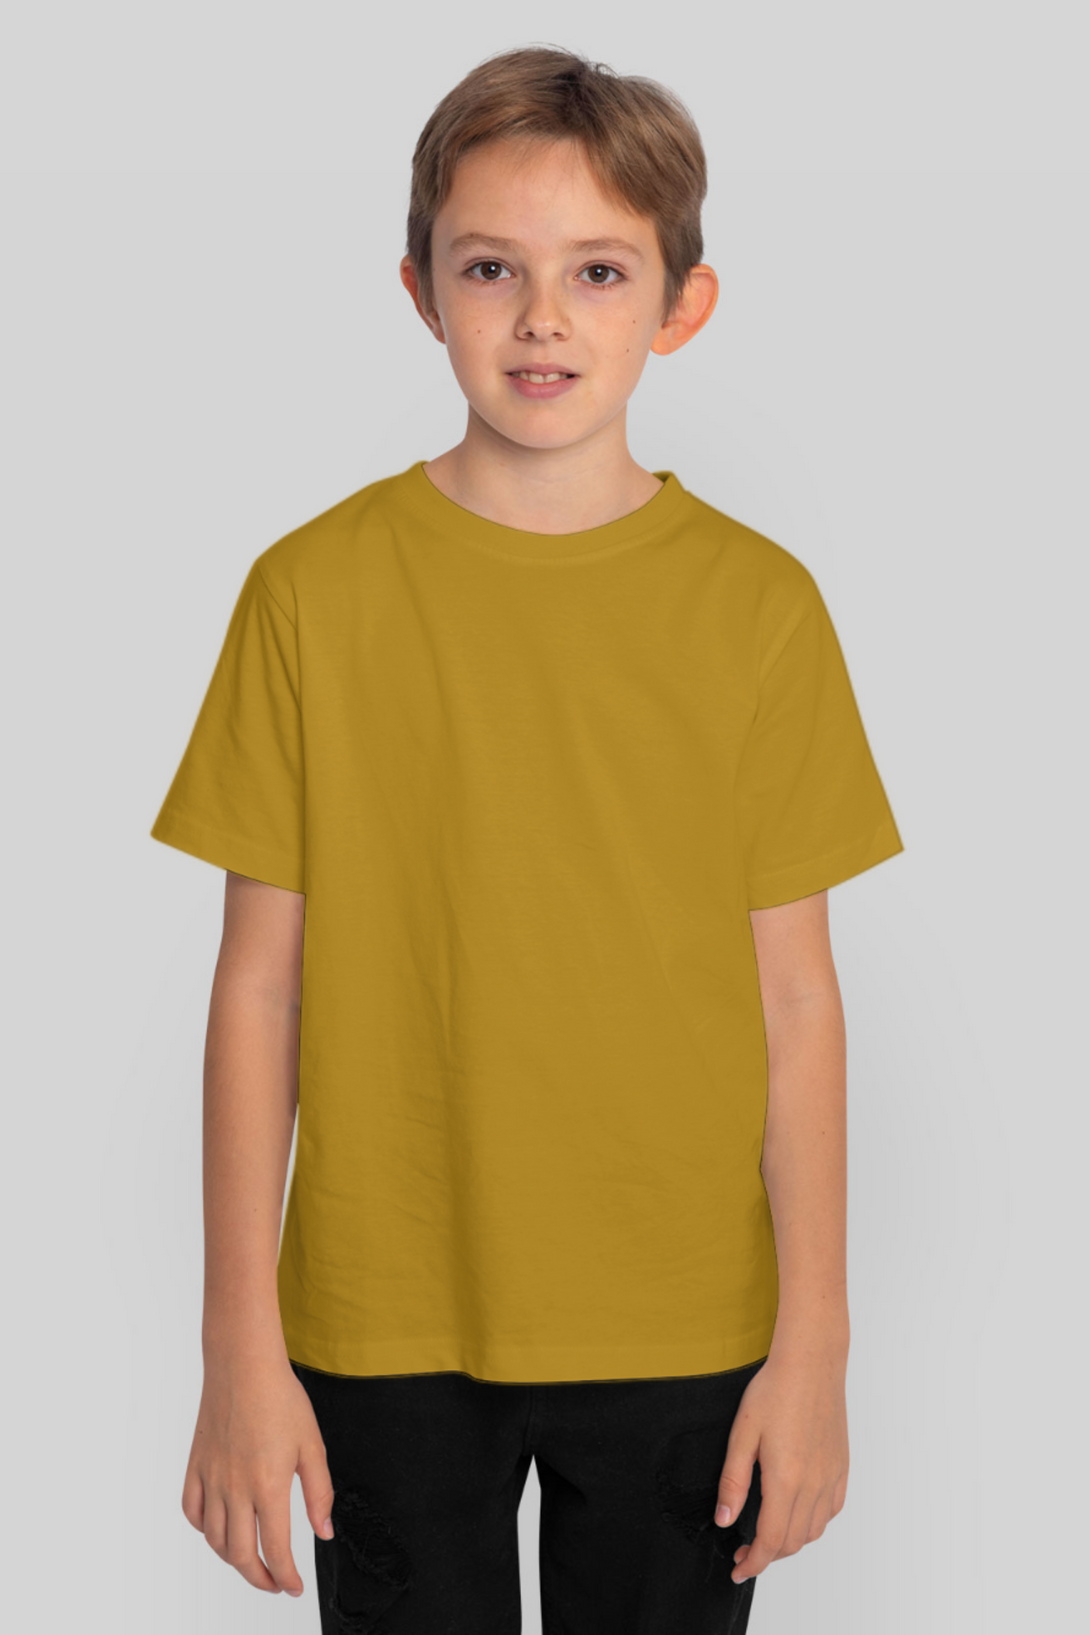 Mustard Yellow T-Shirt For Boy - WowWaves - 1